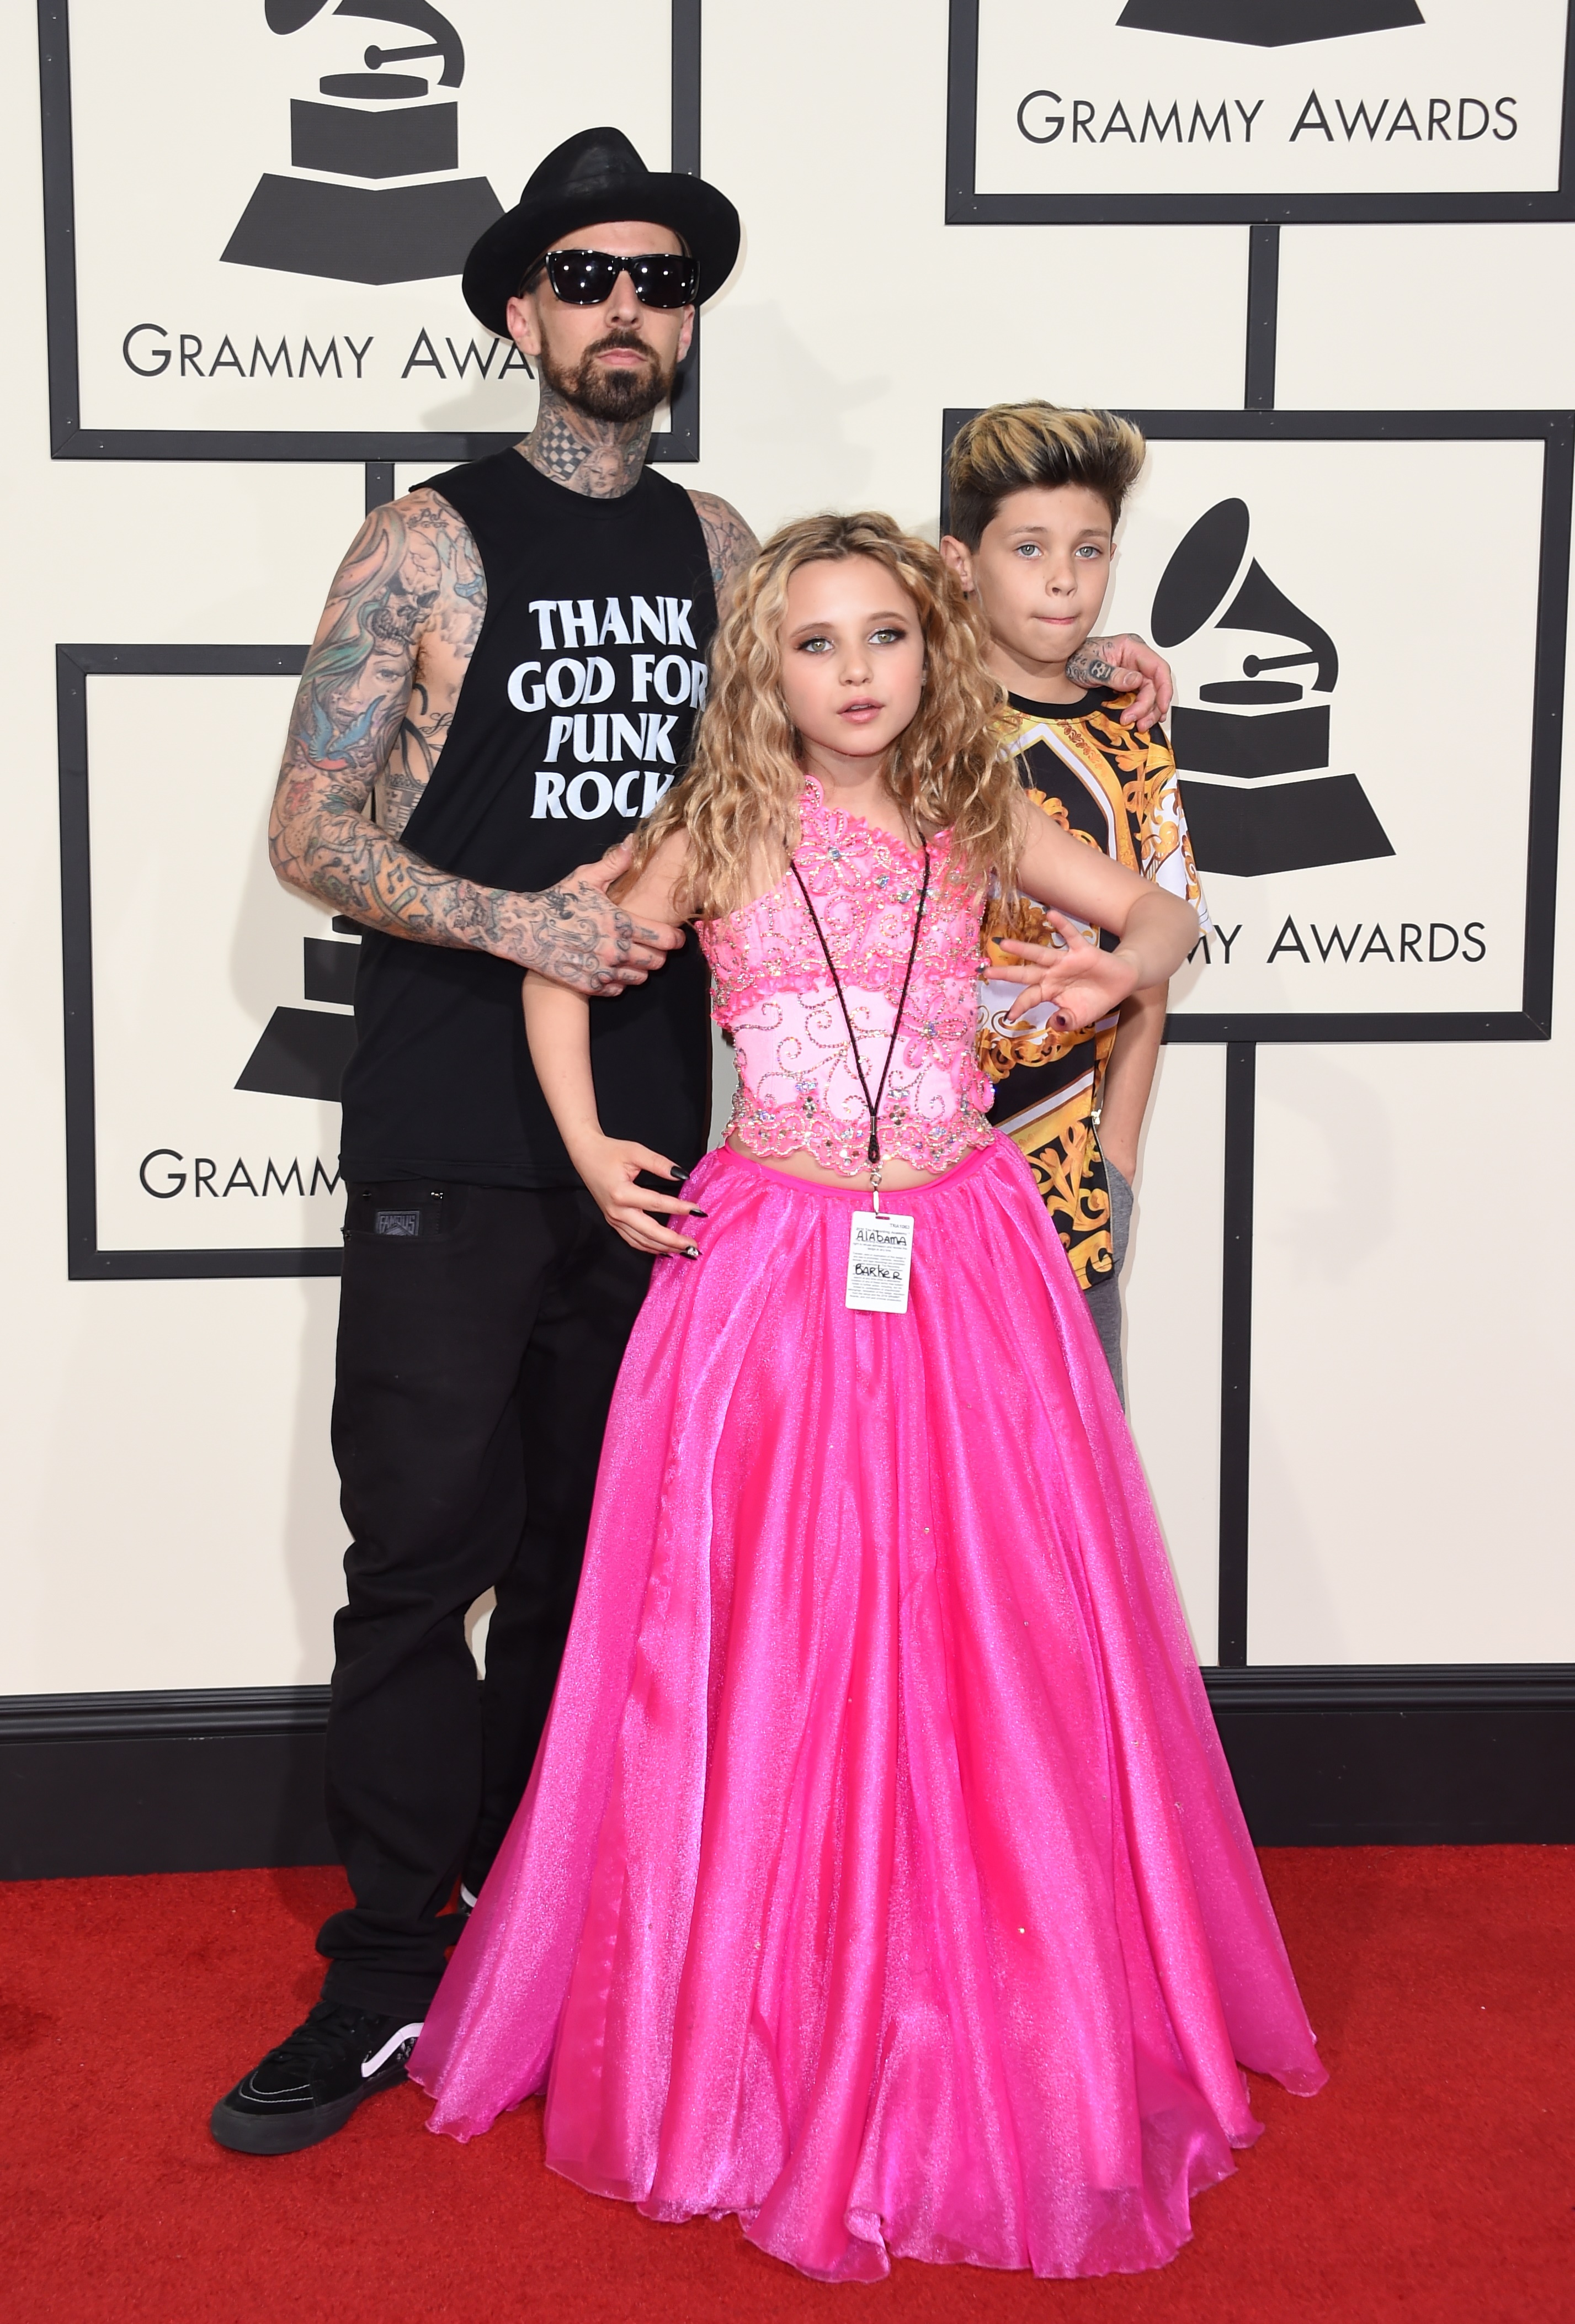 Grammys 2016: Celebrity Red Carpet Photos | Time